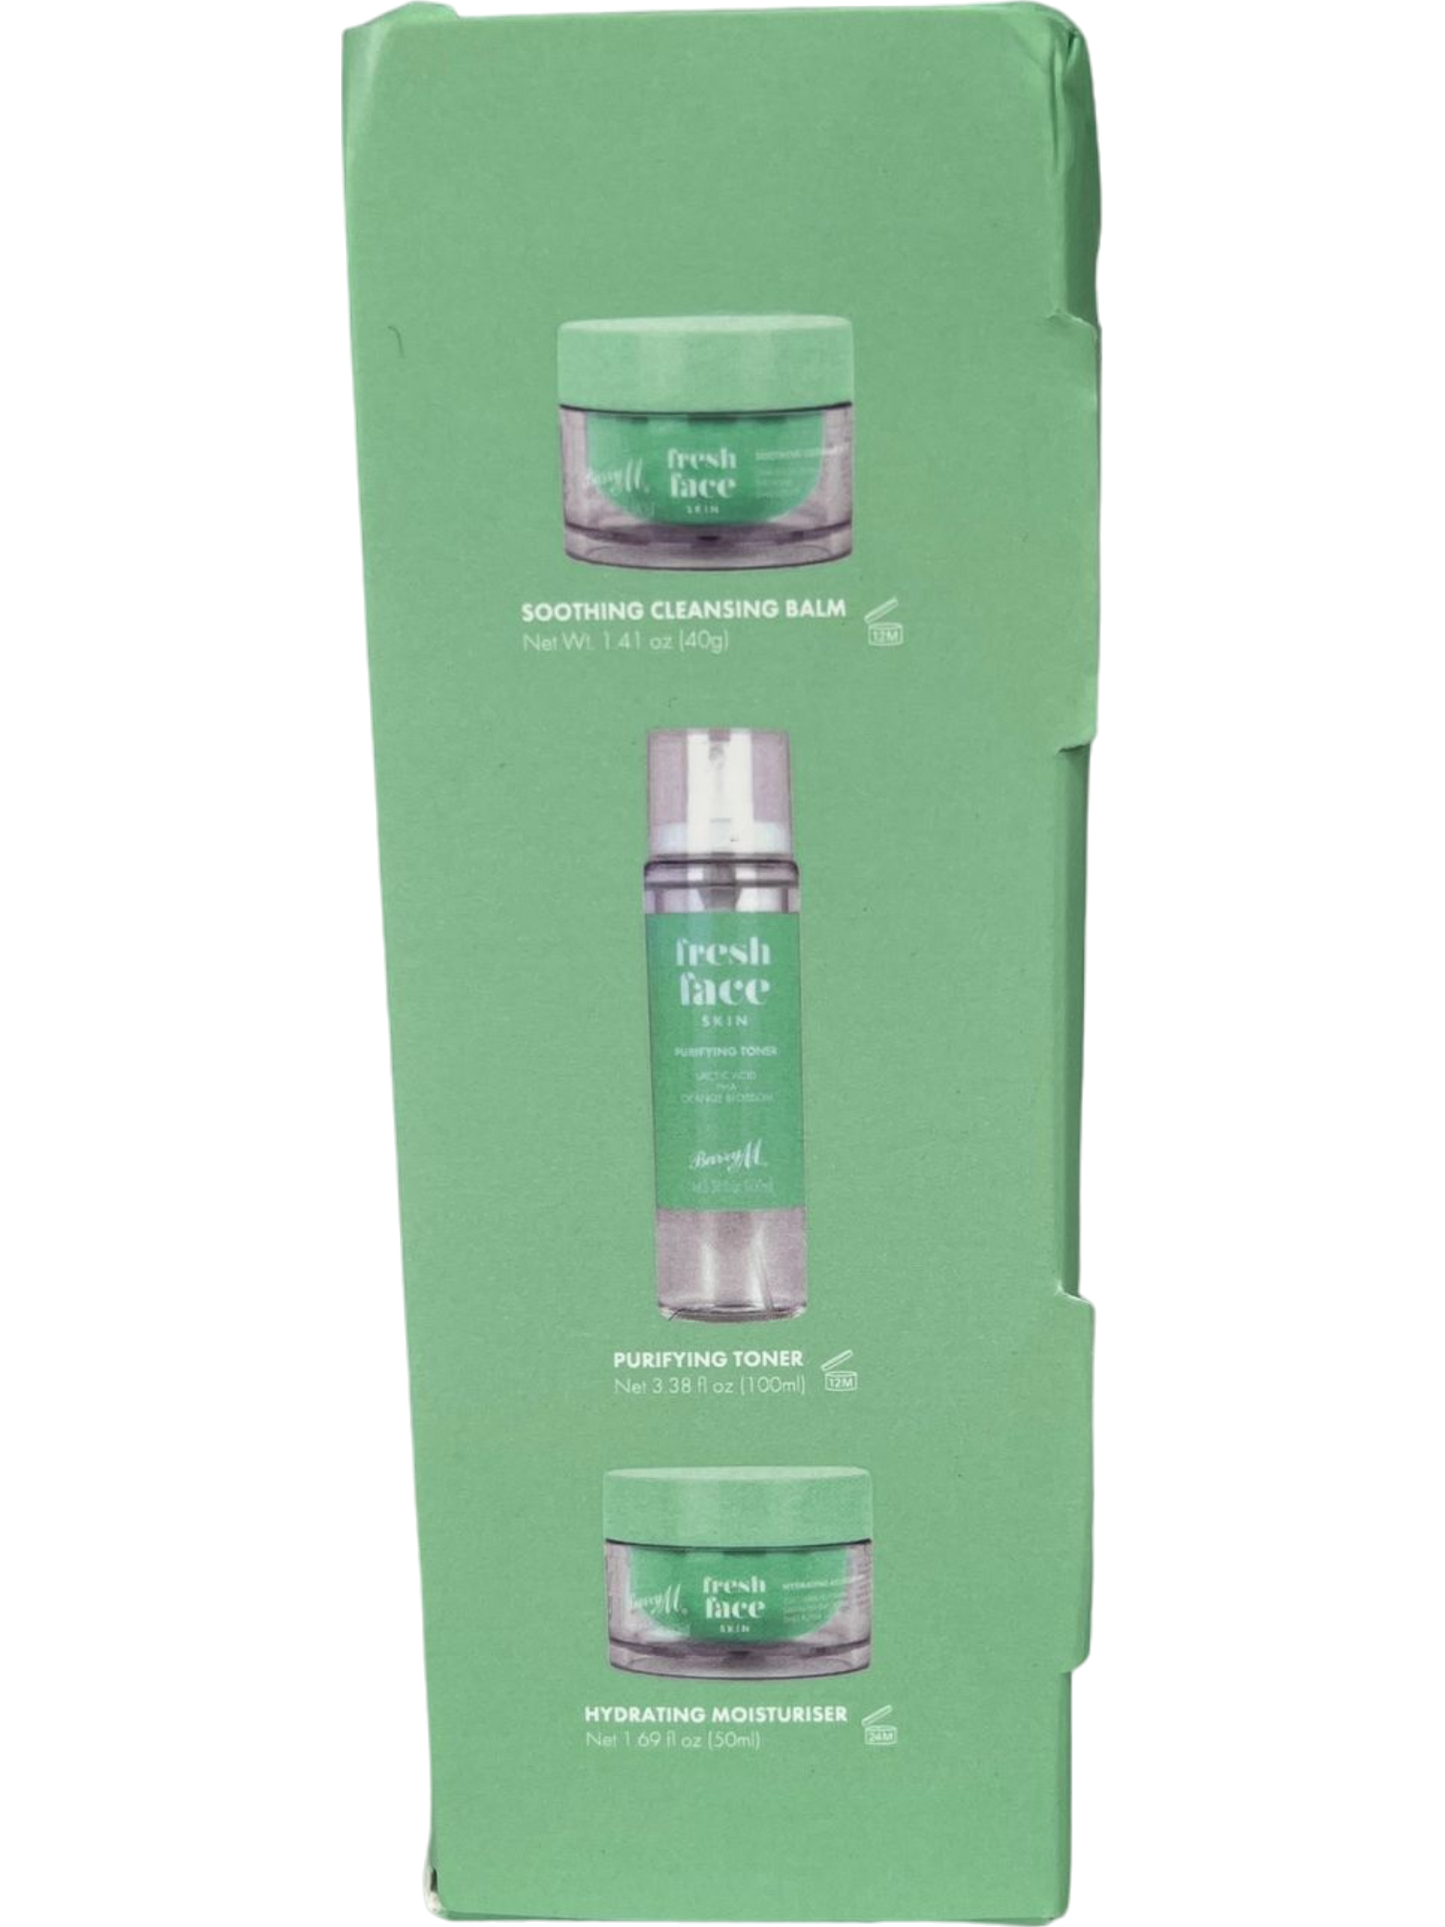 Barry M Green Fresh Face Skin 3 Step Essential Skincare Set